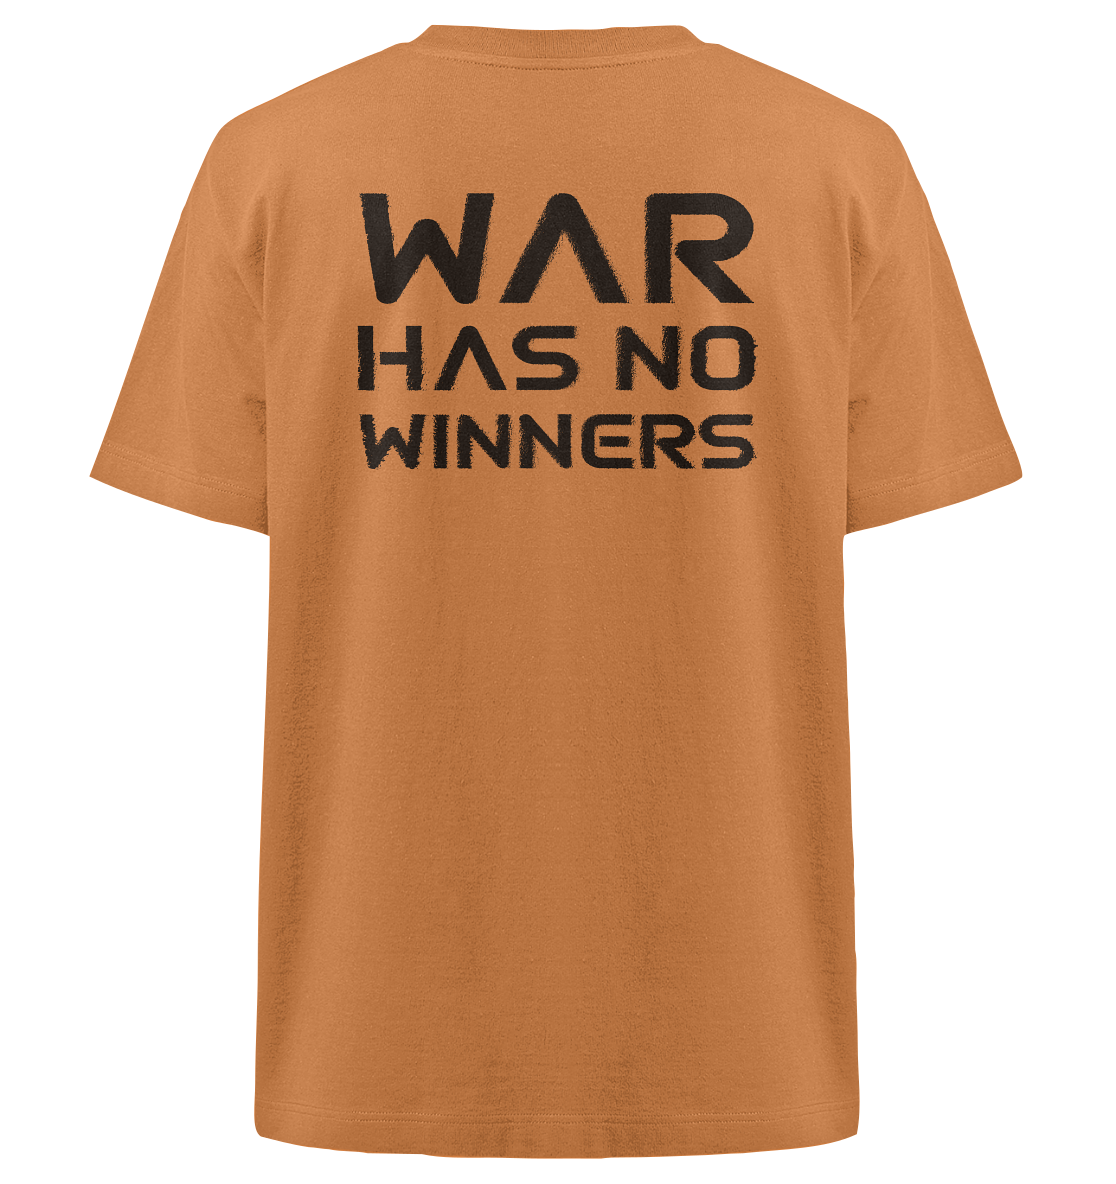 Loose Fit T-Shirt - "War has no winners" - Heavy Oversized Organic Shirt